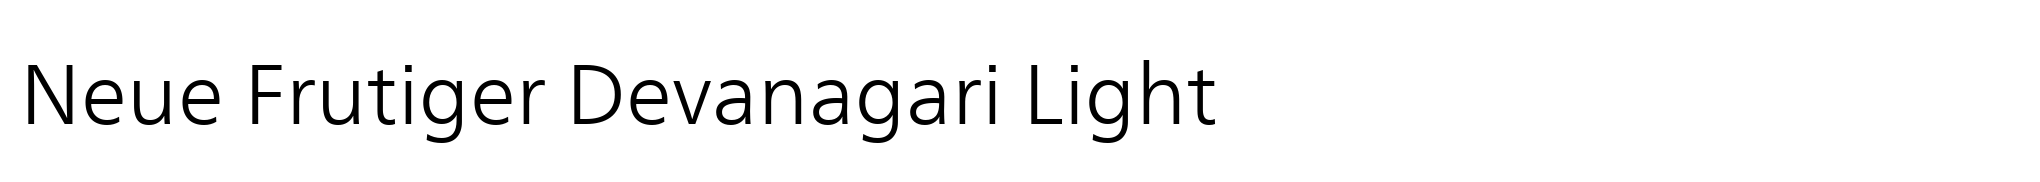 Neue Frutiger Devanagari Light image